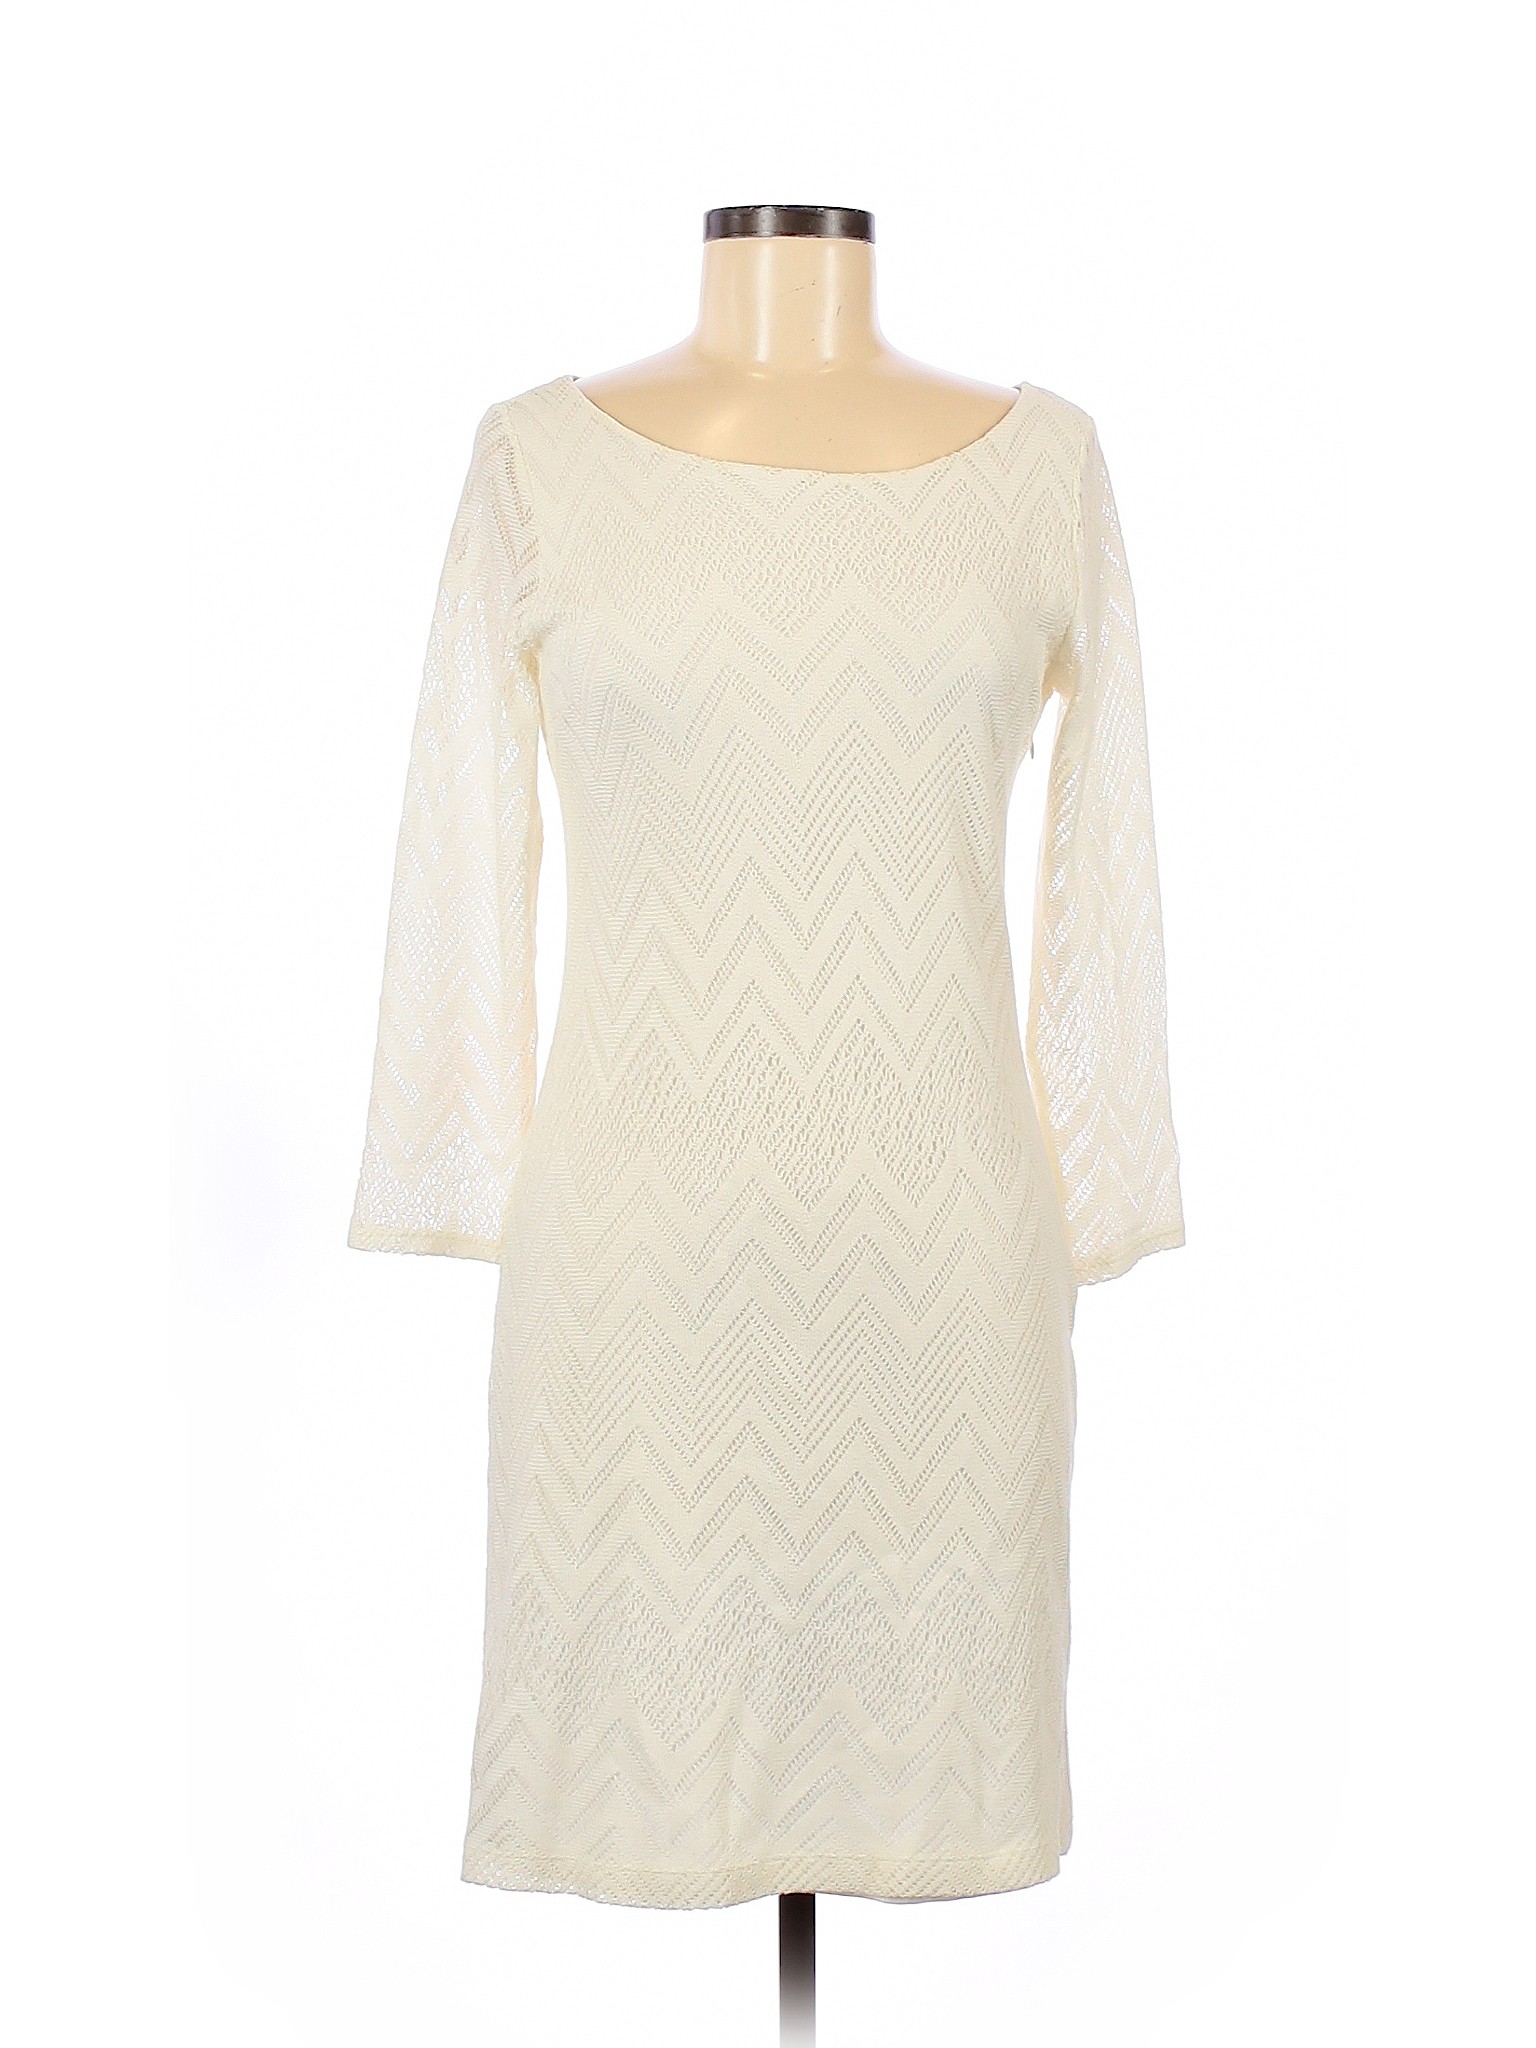 Banana Republic Heritage Collection Women Ivory Casual Dress 6 | eBay